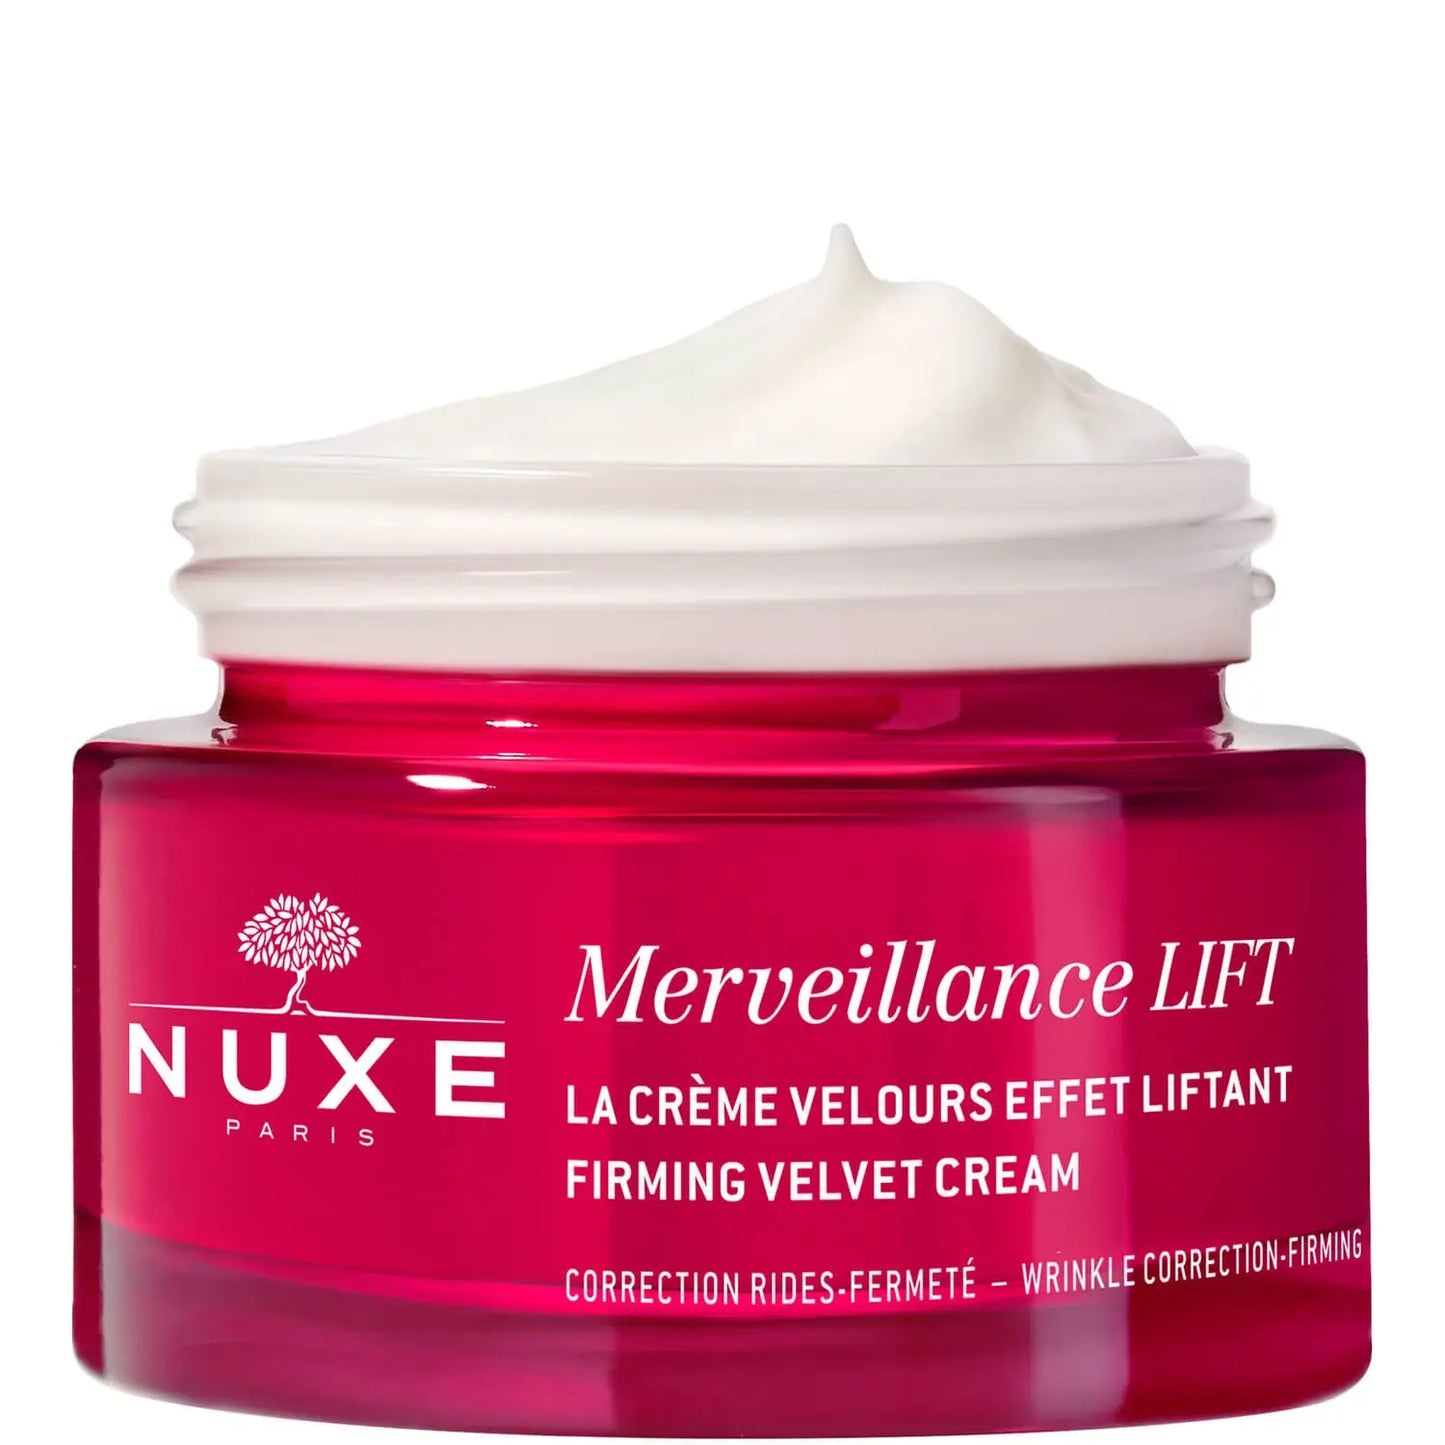 NUXE - Crème Effet Lifting Velouté, Merveillance Lift 50 ml